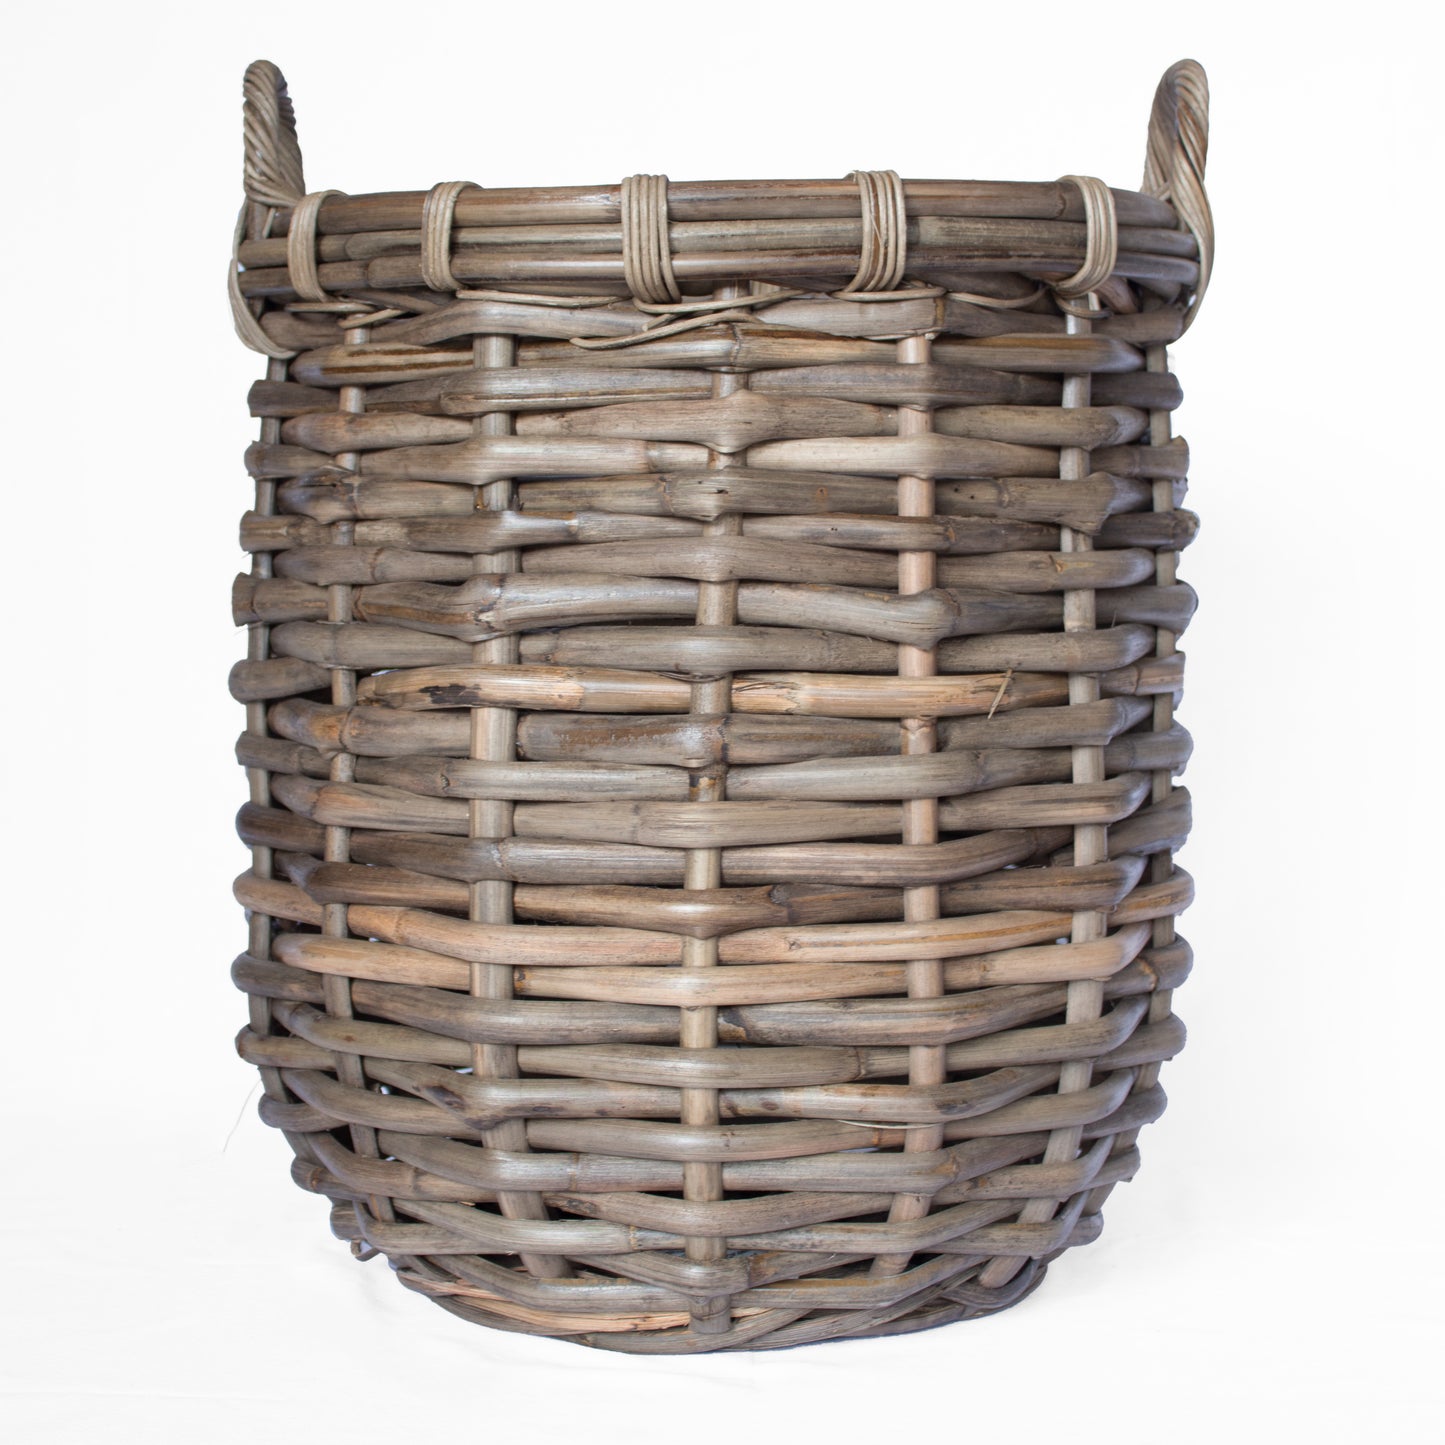 Rattan Round Tapered Basket